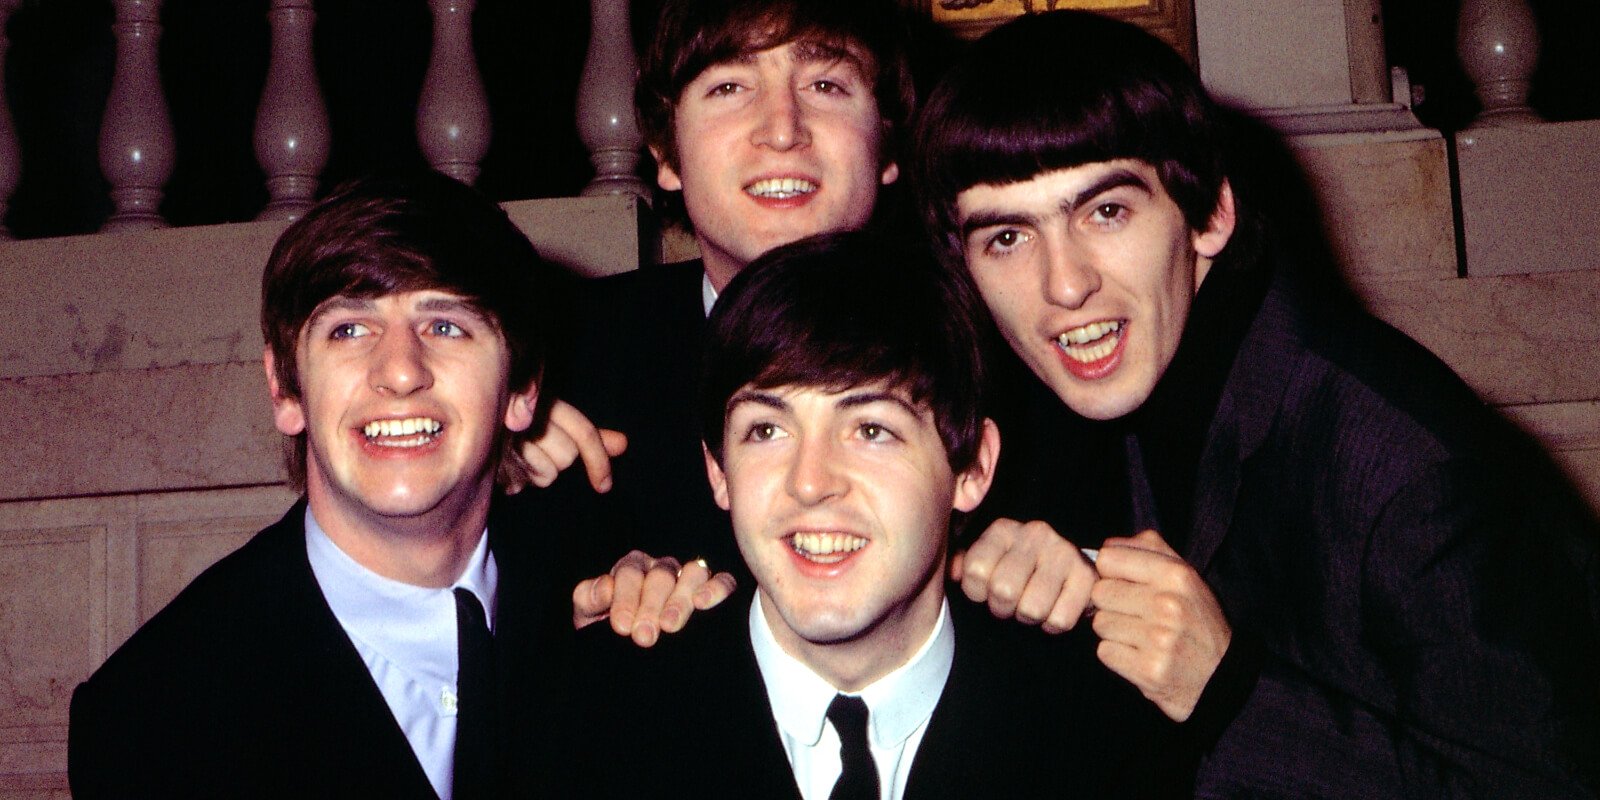 Ringo Starr, Paul McCartney, John Lennon and George Harrison photographed in 1964.